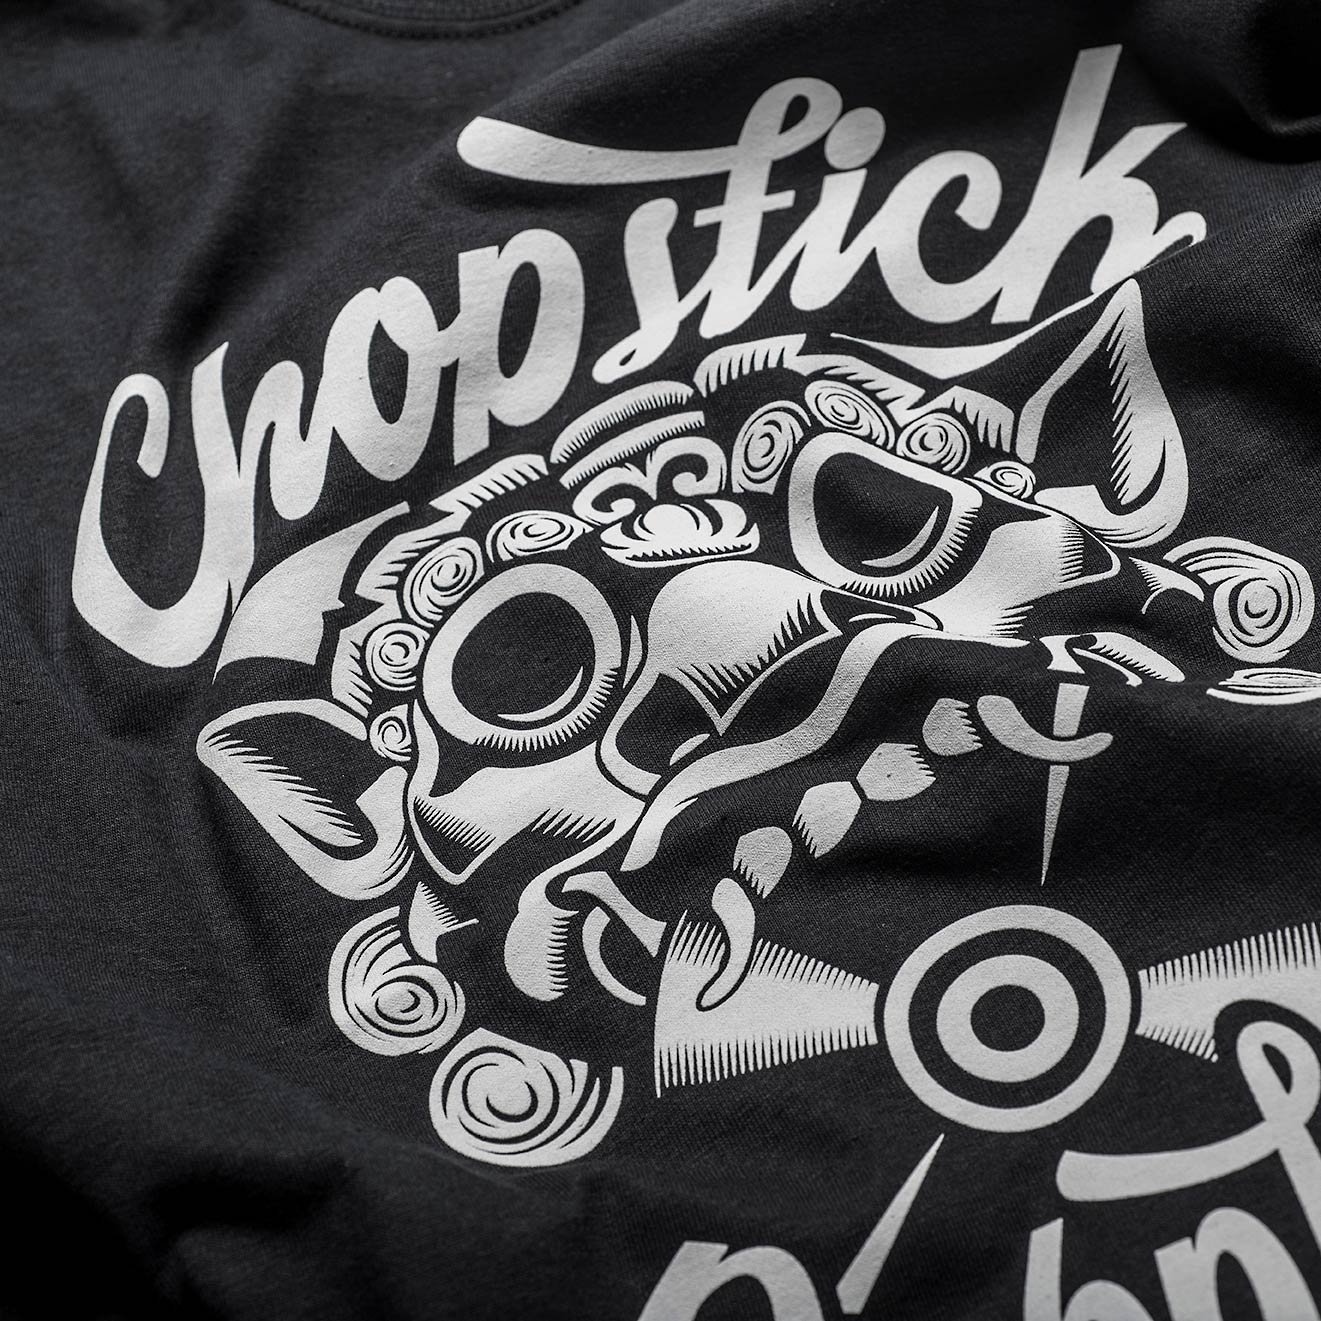 Chopstick Dubplate Design on Black T Shirt